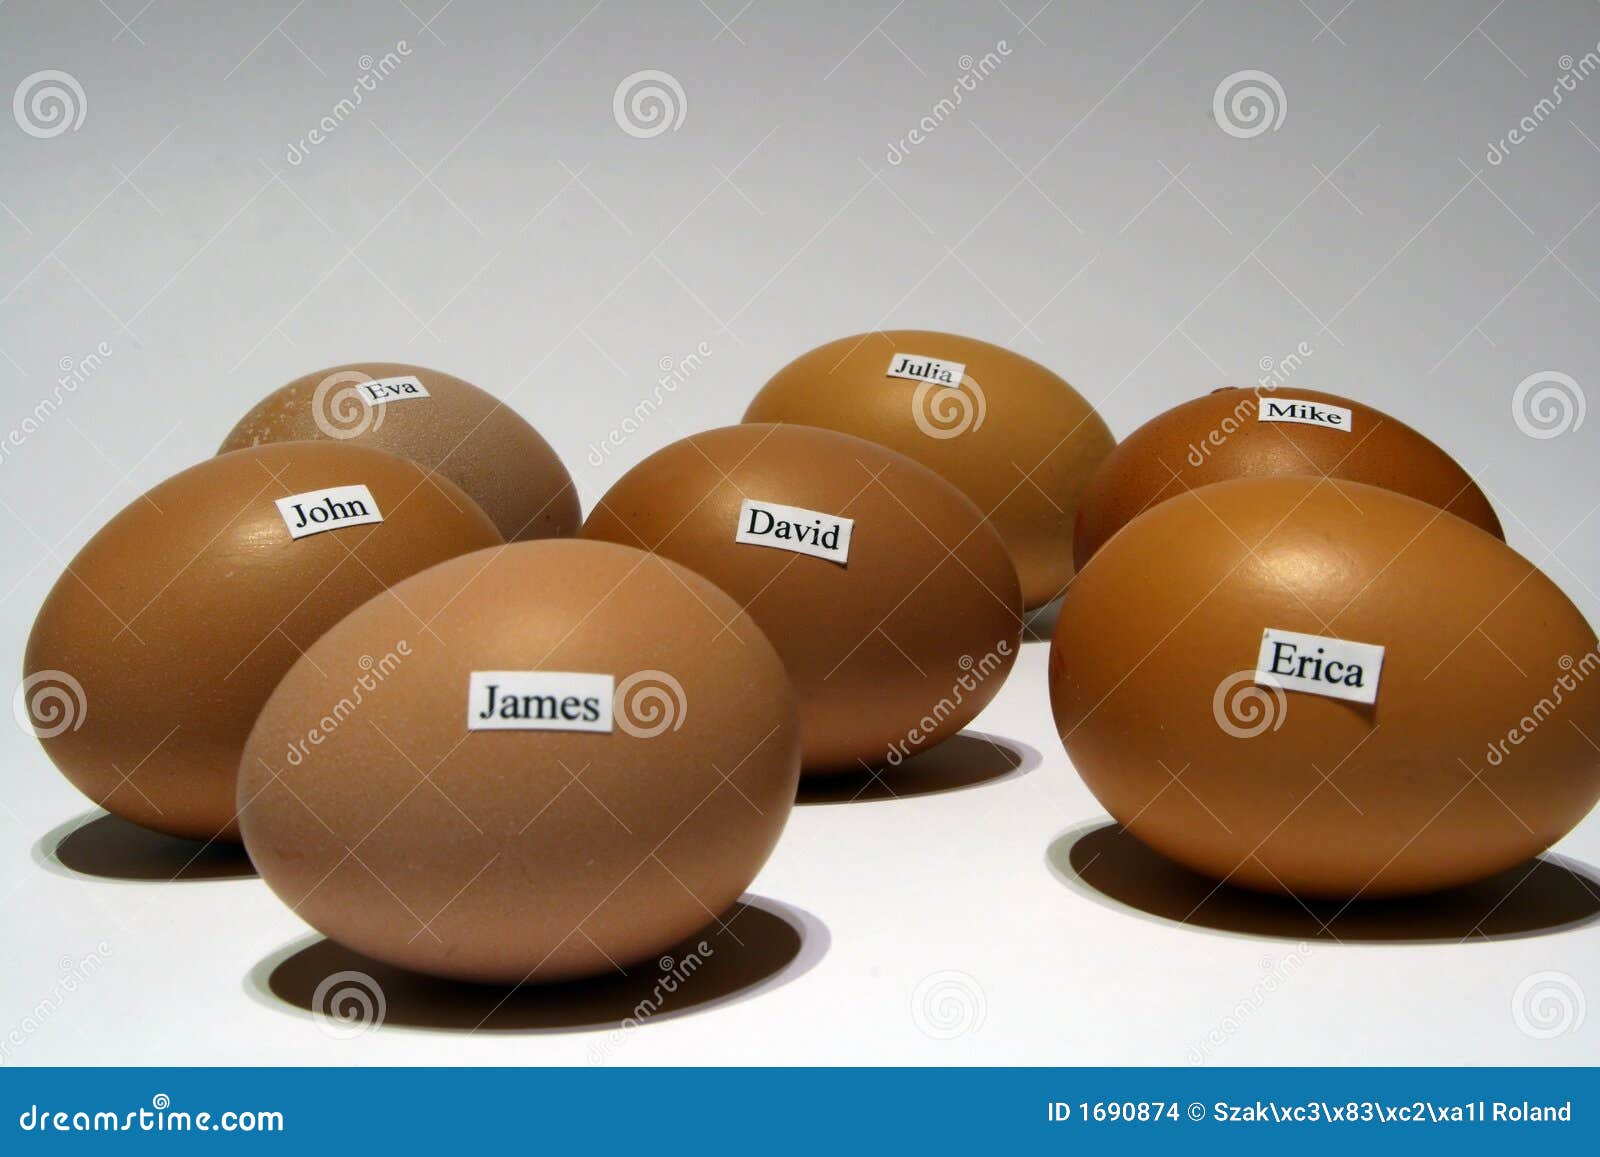 egg names